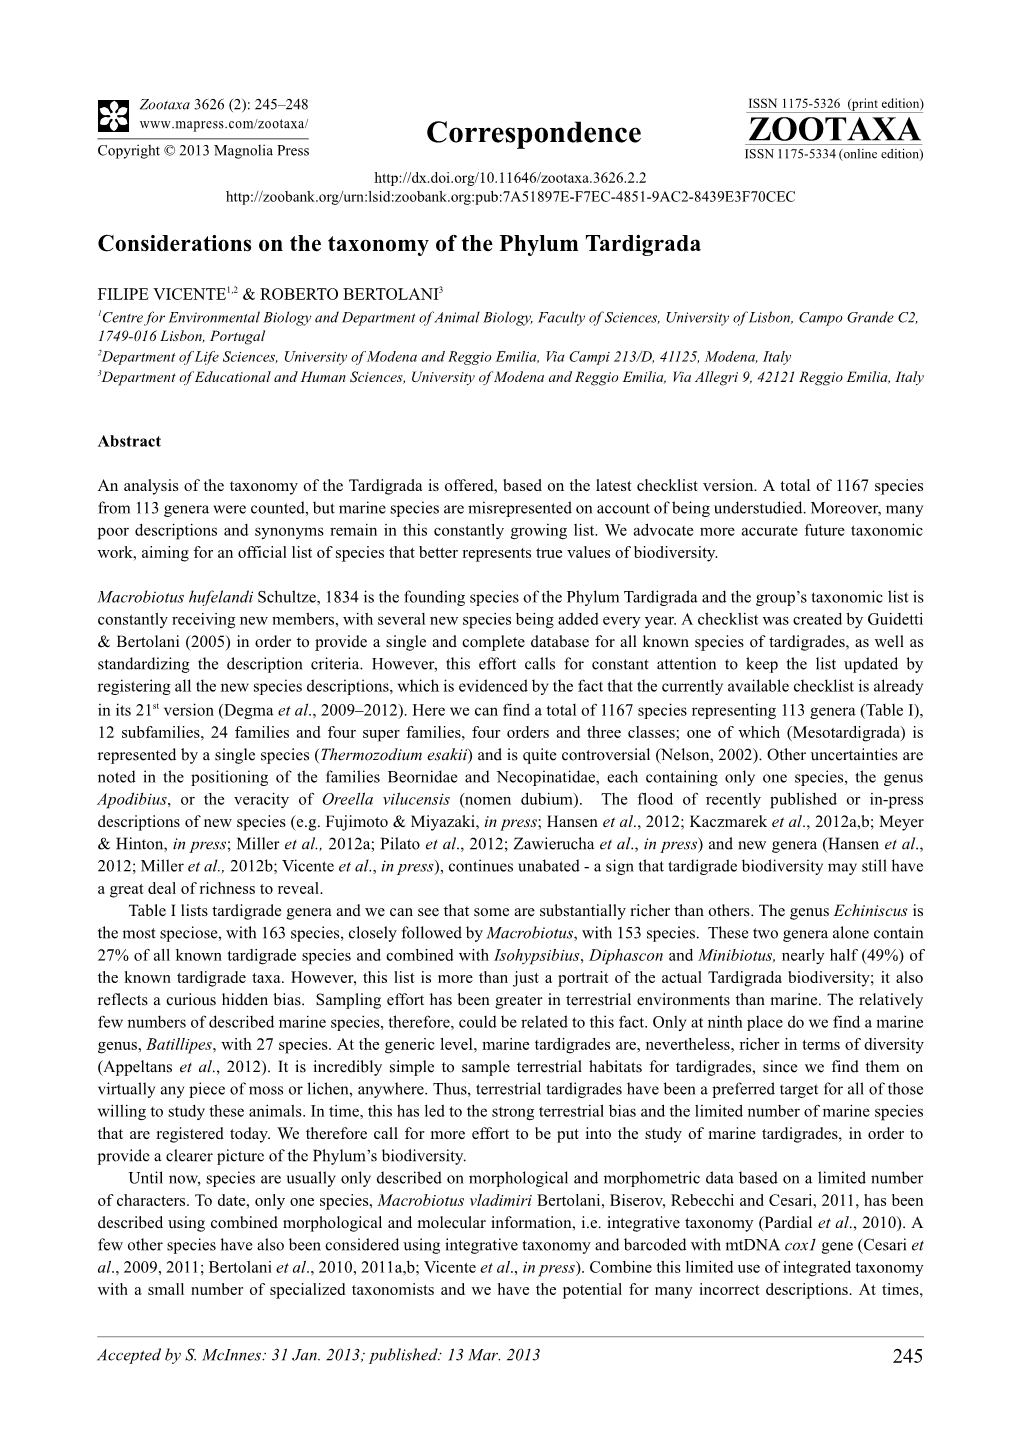 Considerations on the Taxonomy of the Phylum Tardigrada